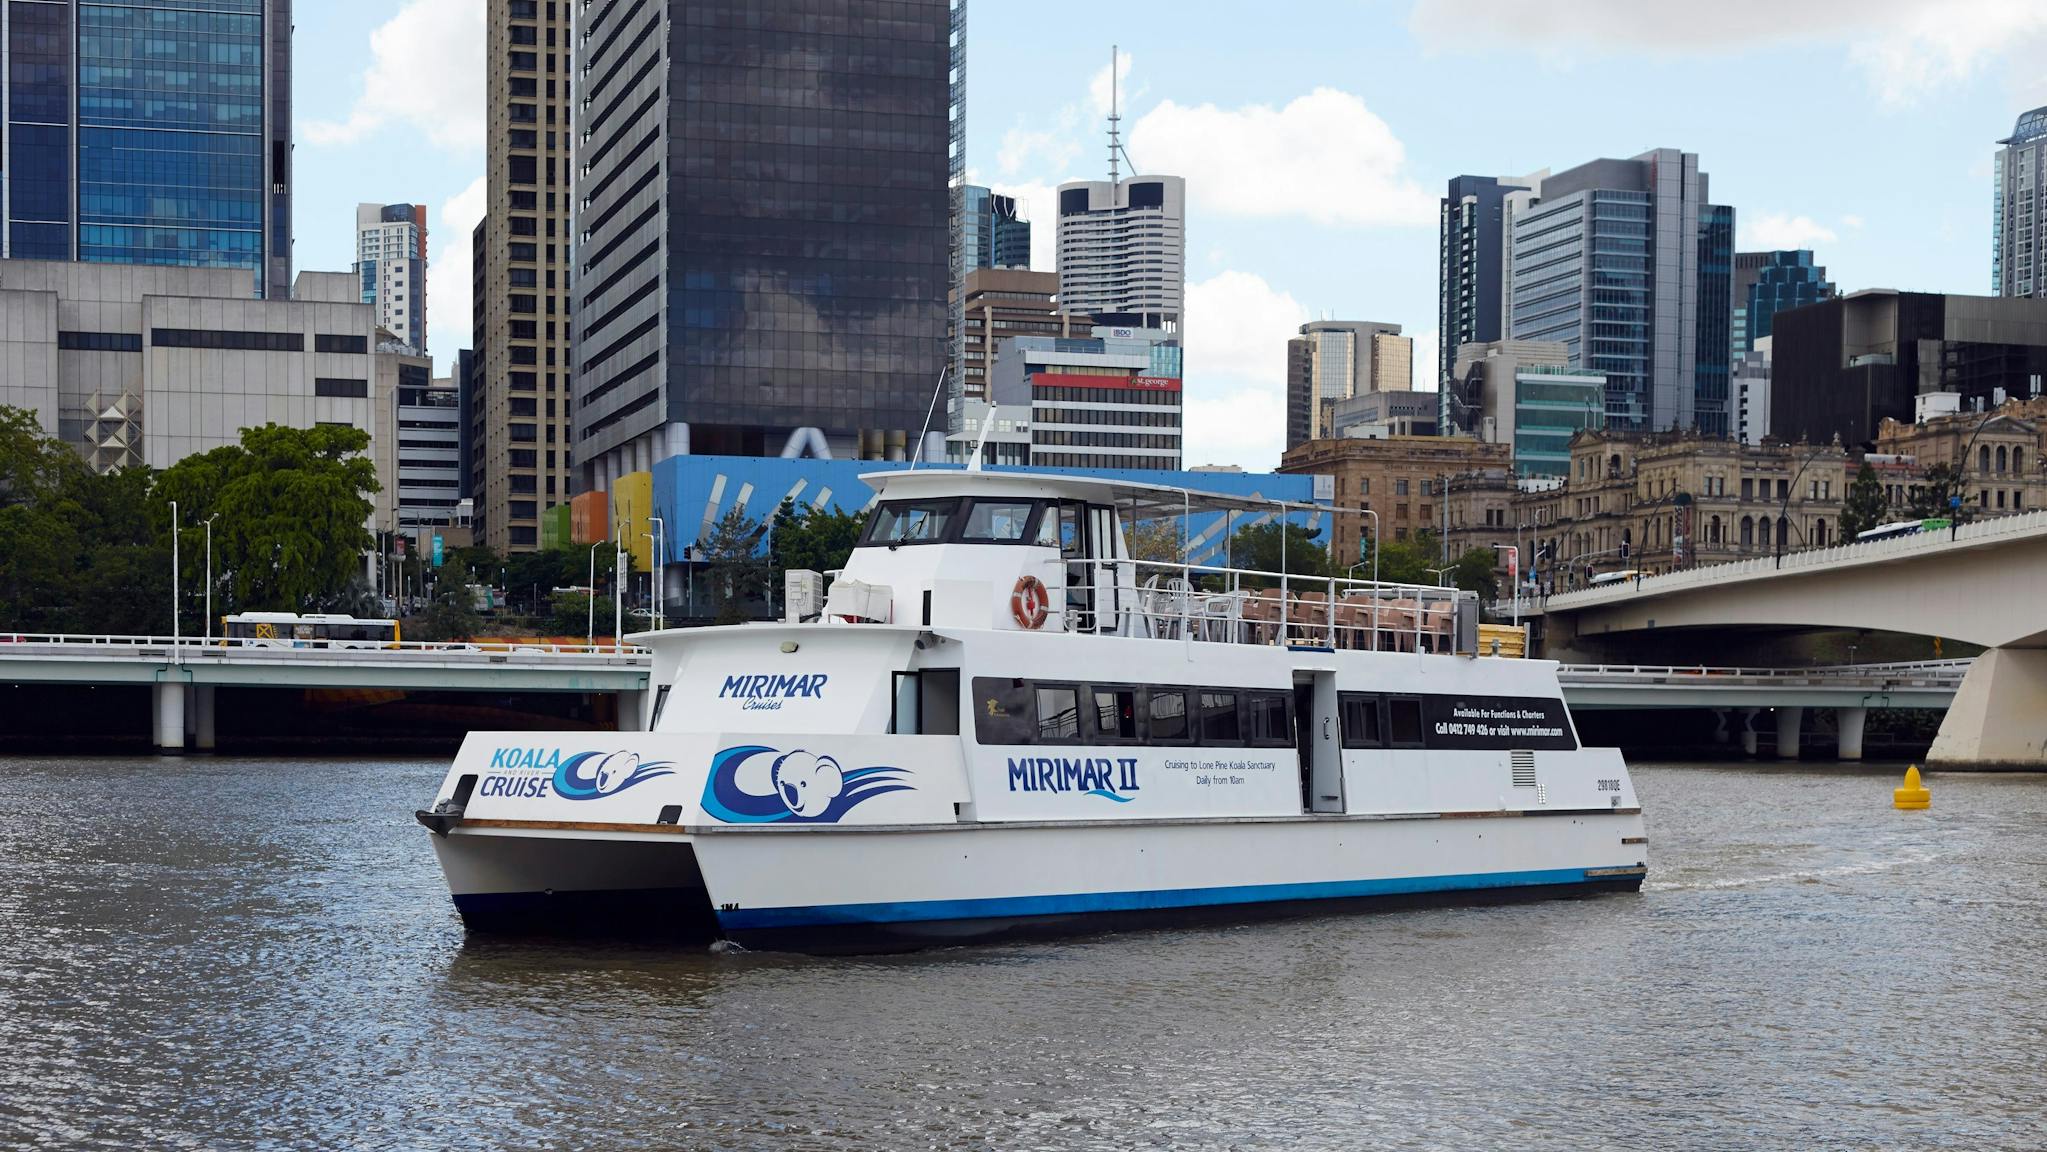 Cruise on the Brisbane River